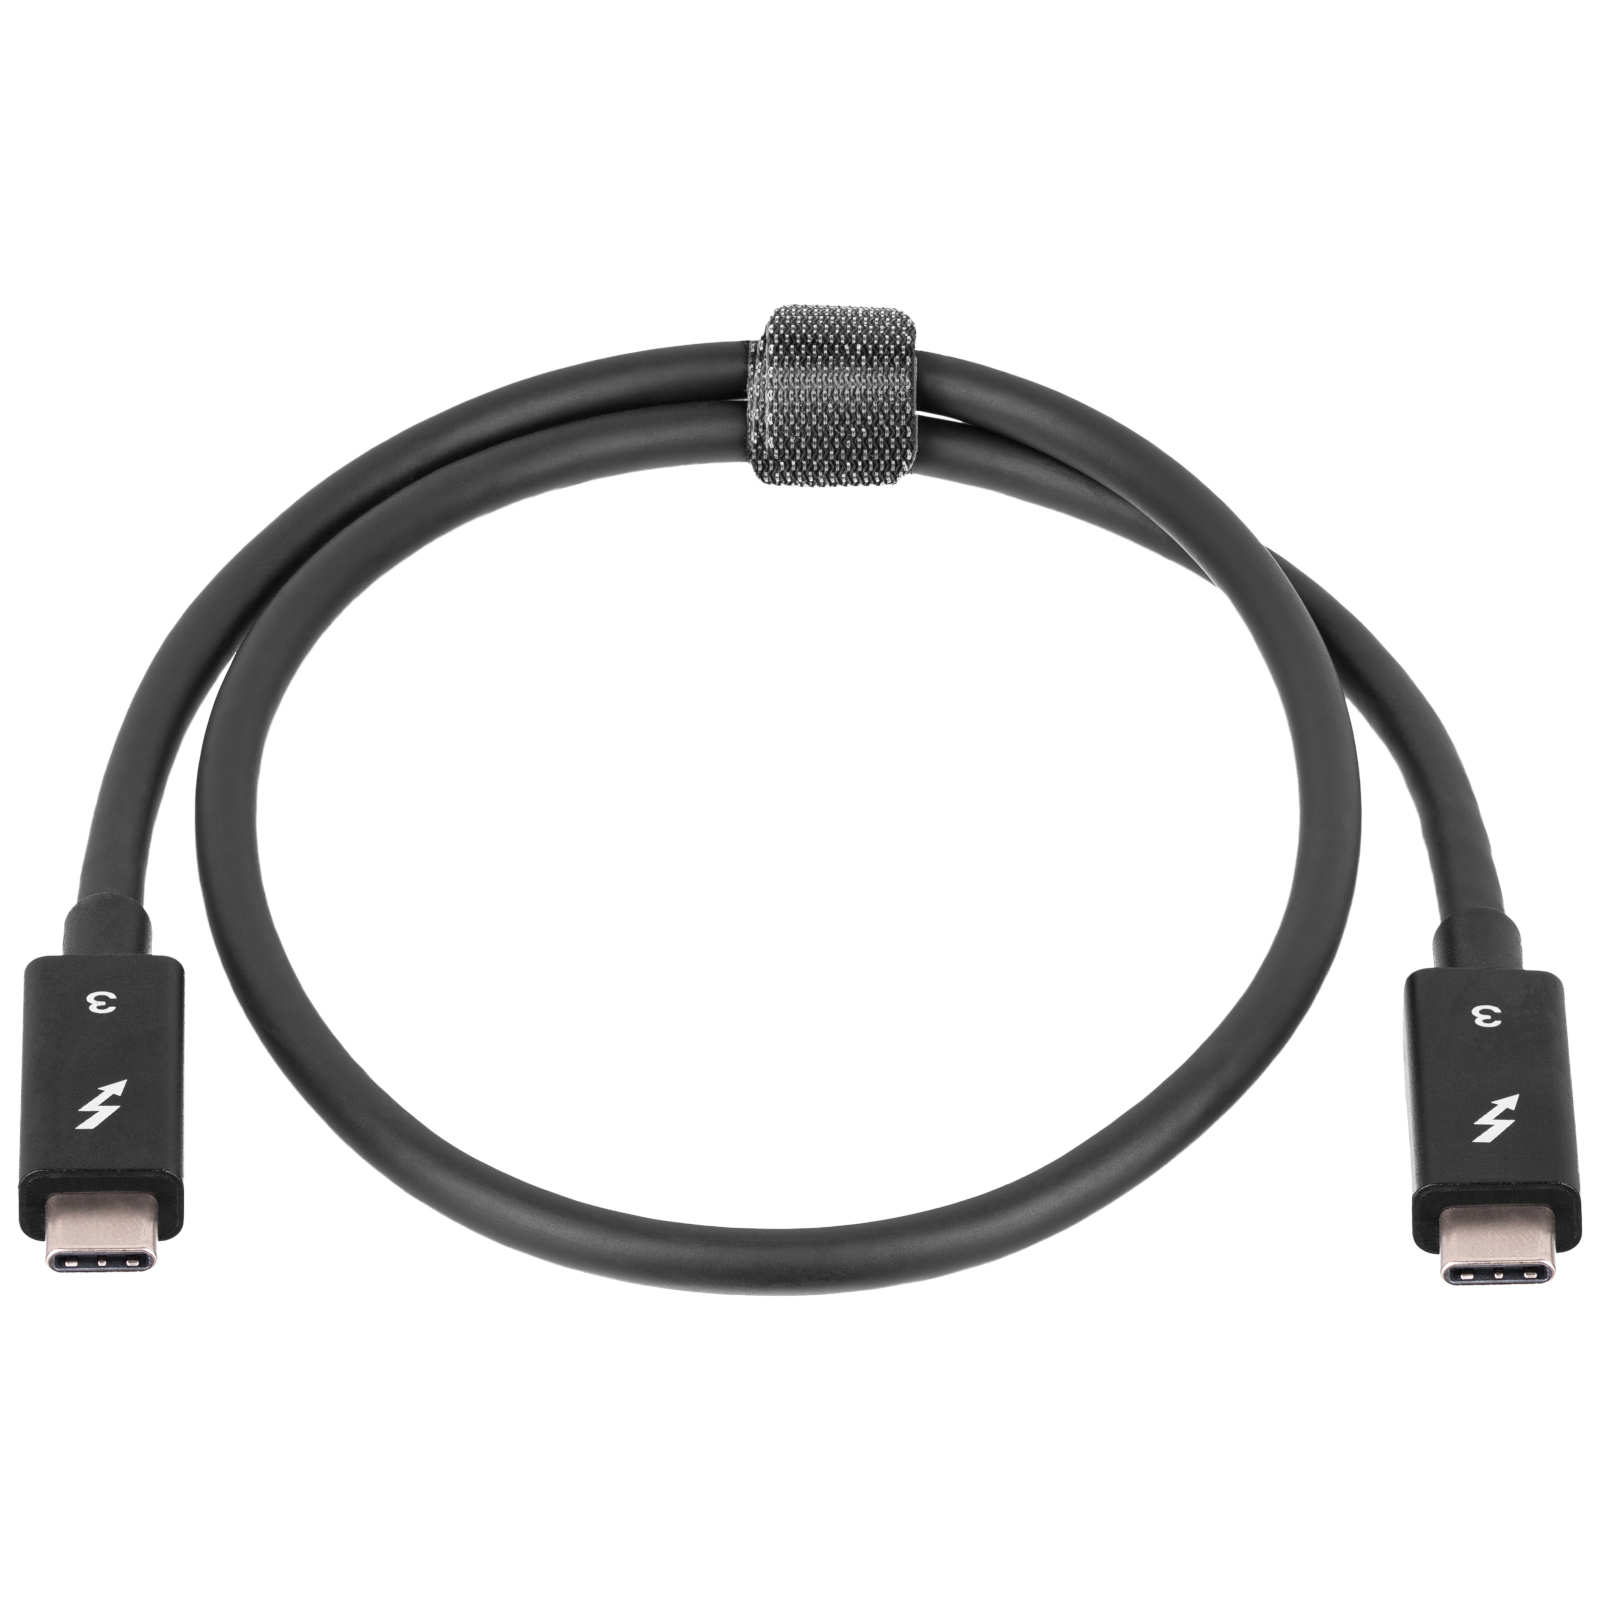 main_image Kabel Thunderbolt 3 (USB Typ C) 50 cm AK-USB-33 passiv